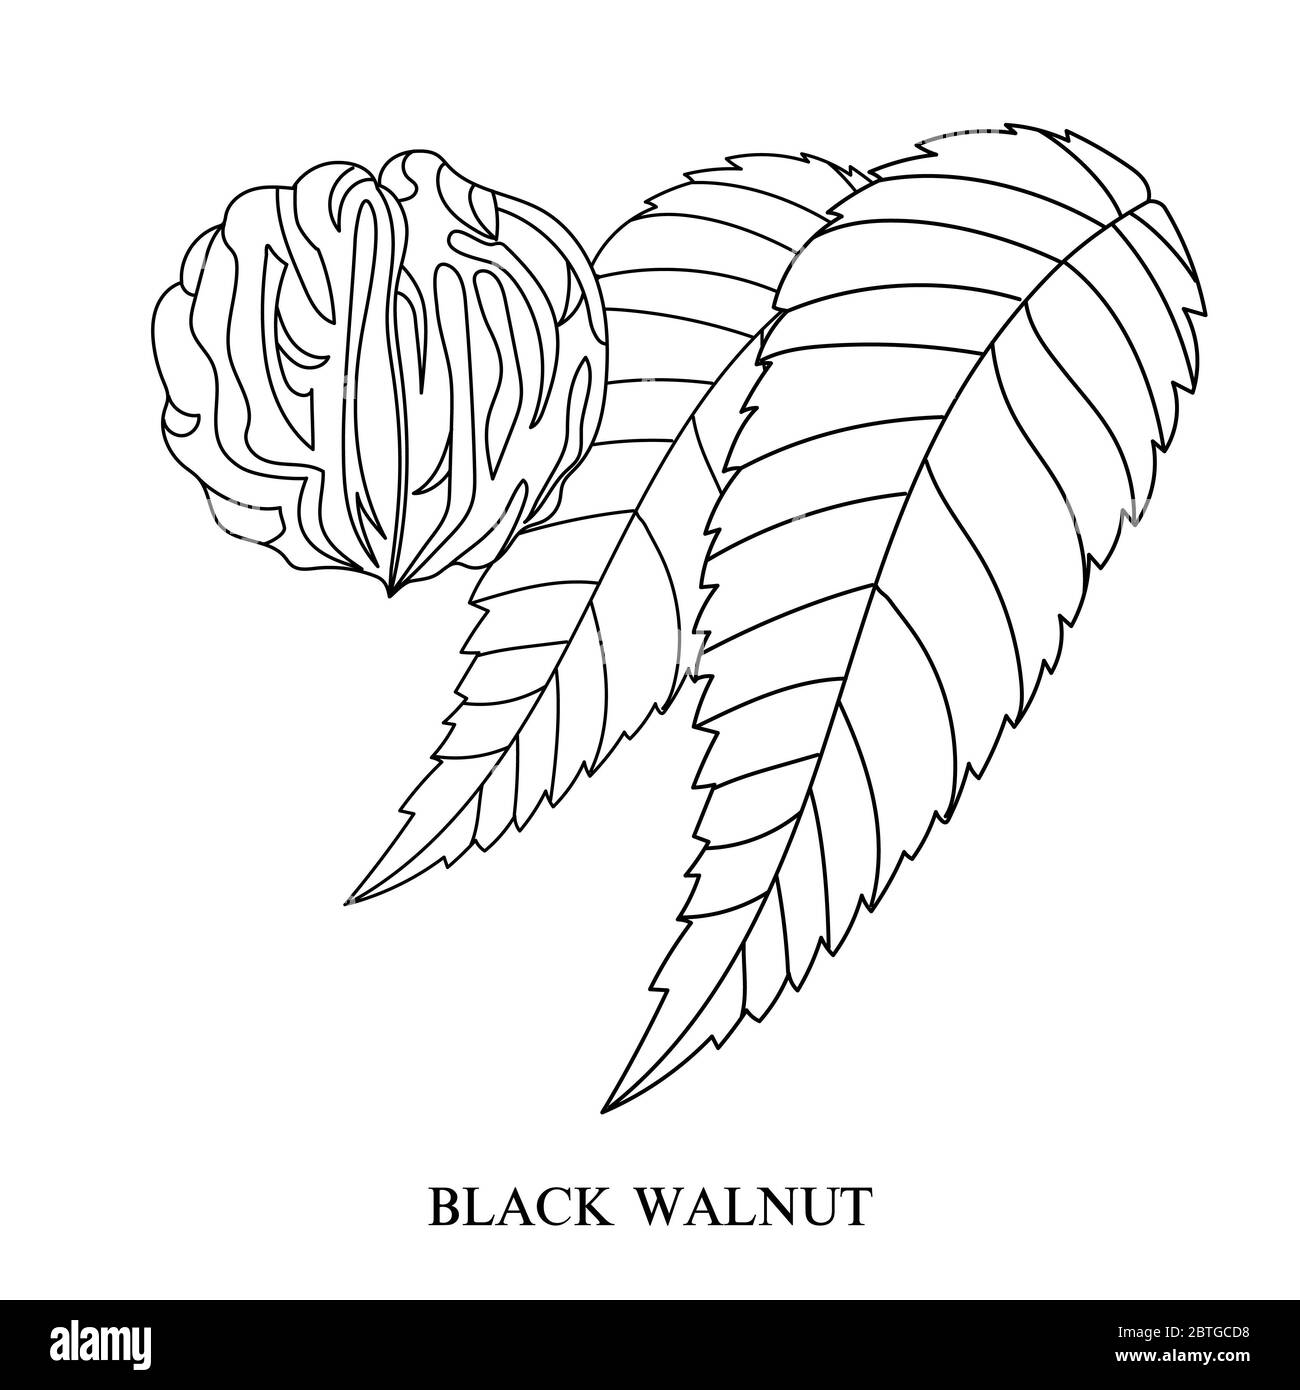 Eastern black walnut (Juglans nigra). Hand-drawn botanical vector illustration. Linear image of a nut and leaves Stock Photo